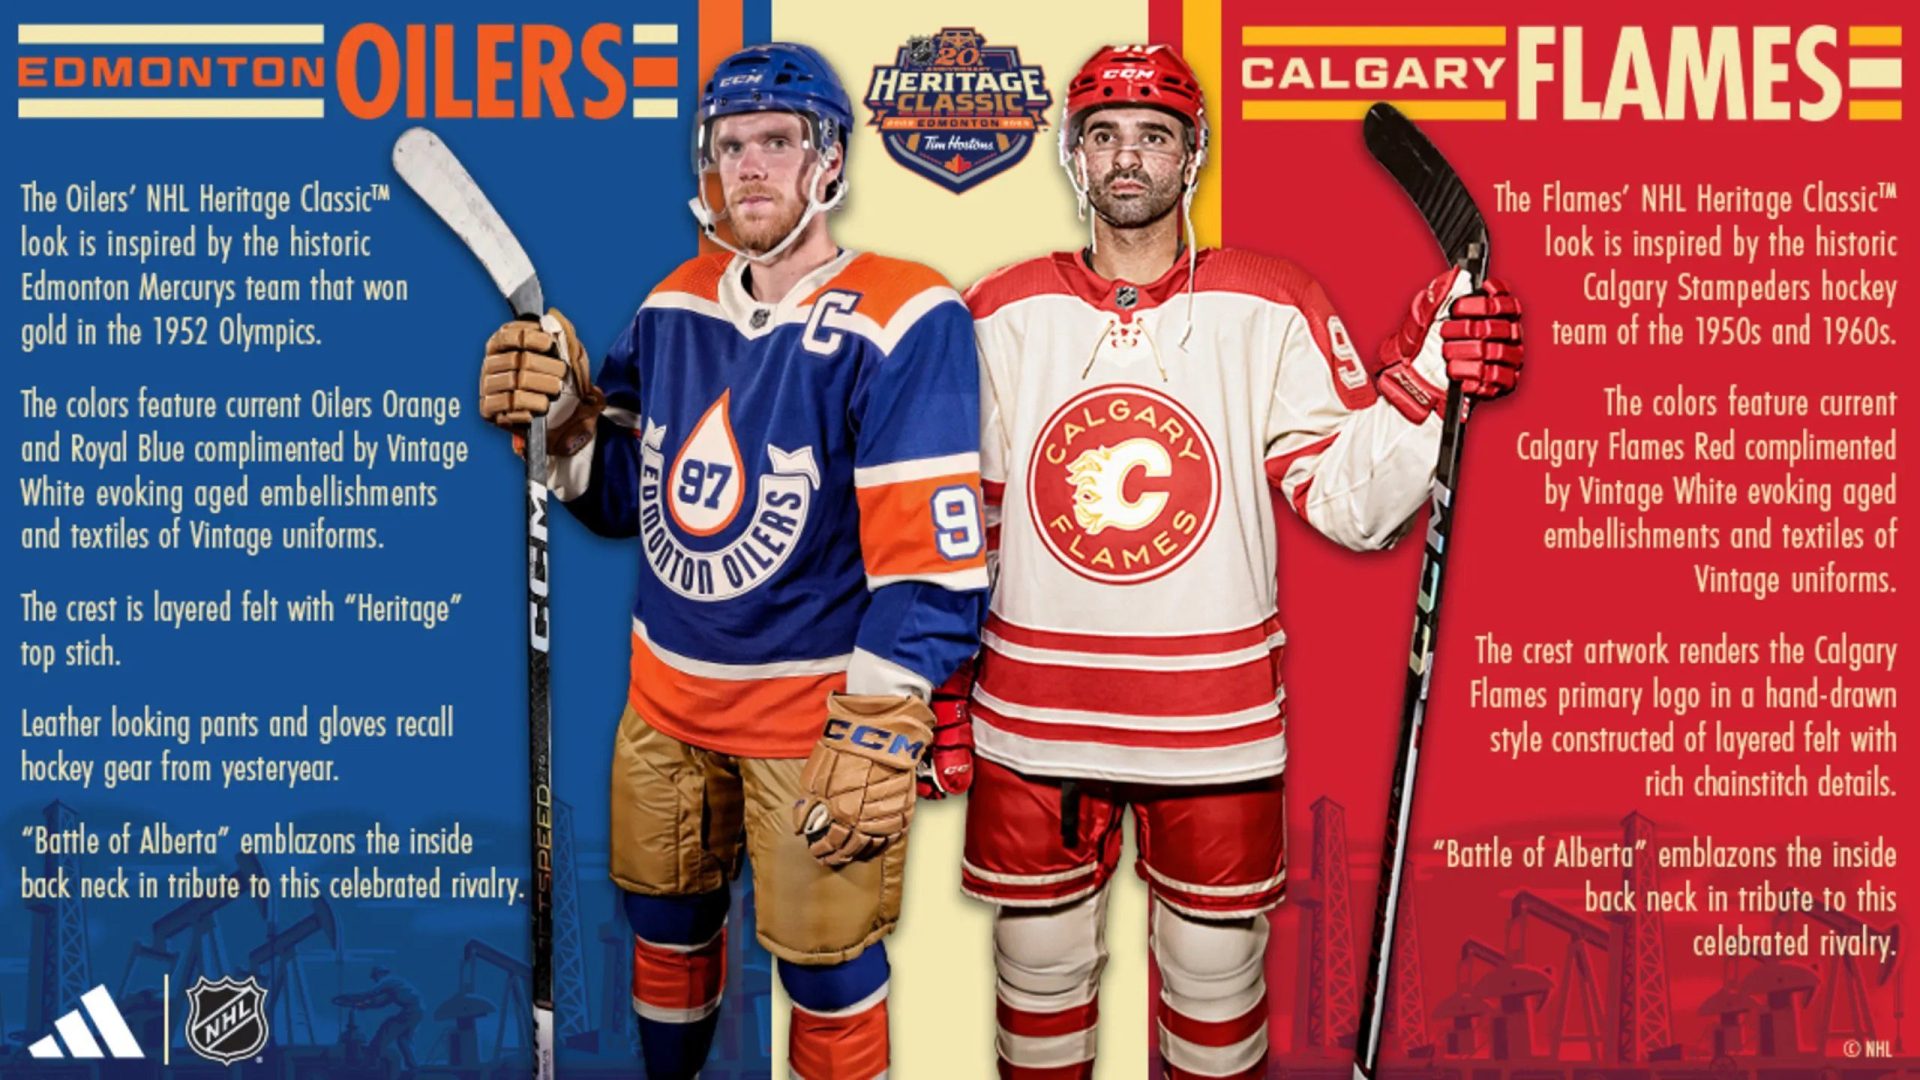 Calgary Flames: Jerseys & Merchandise